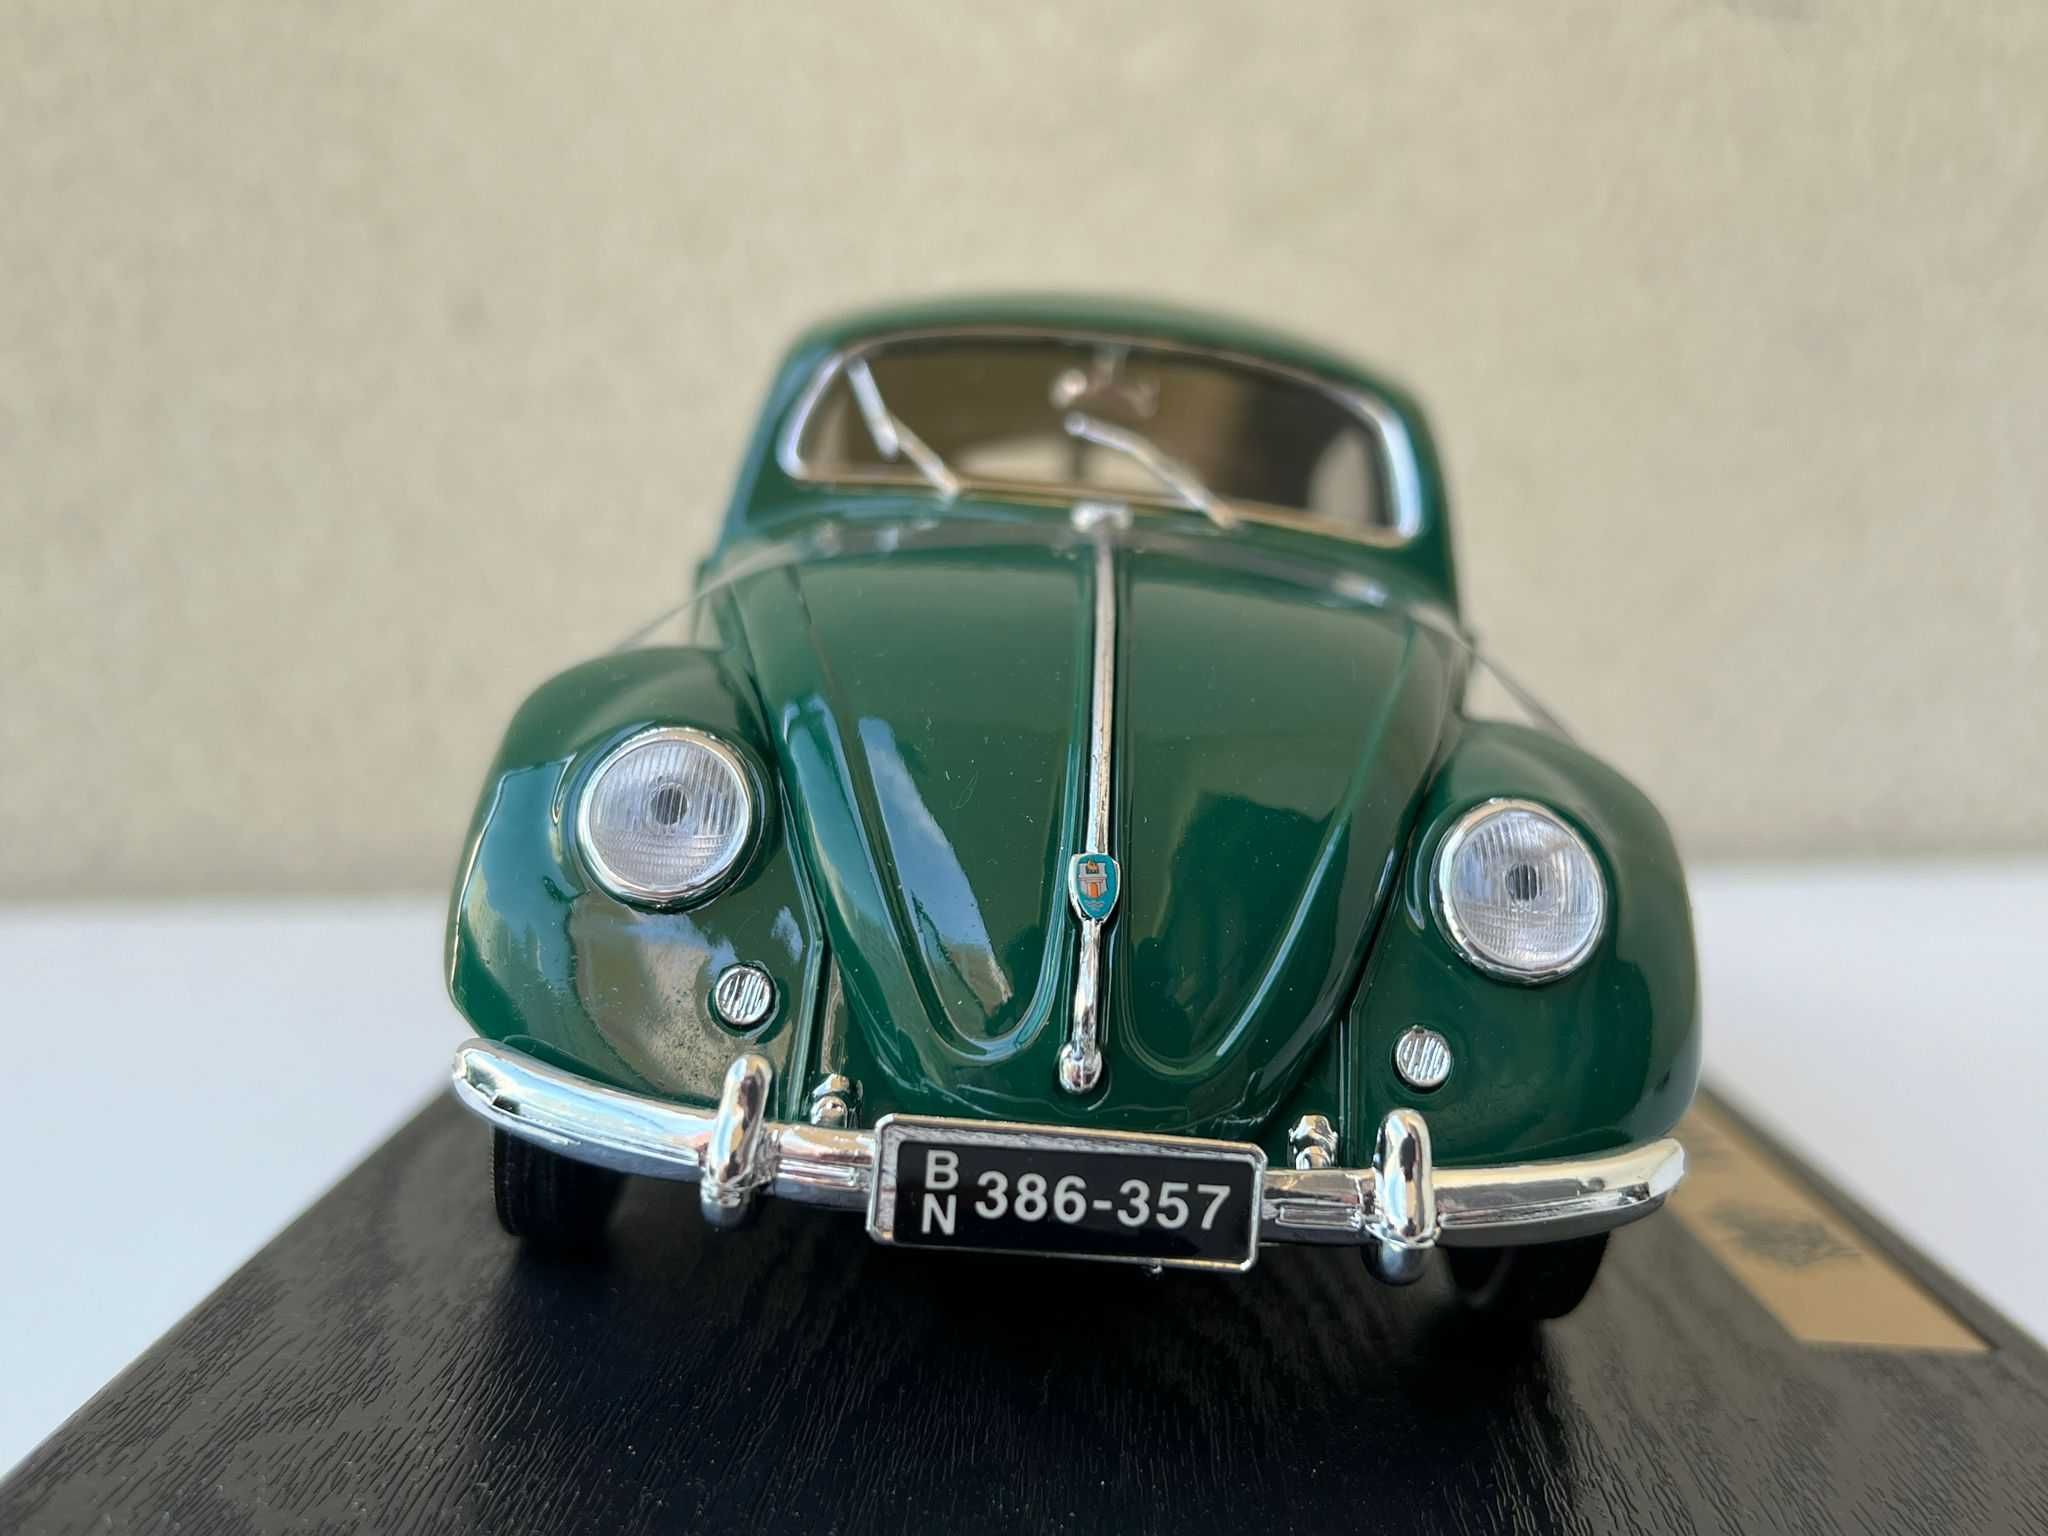 Macheta Auto 1/18 Premium Edition Maisto VW Beetle 1961